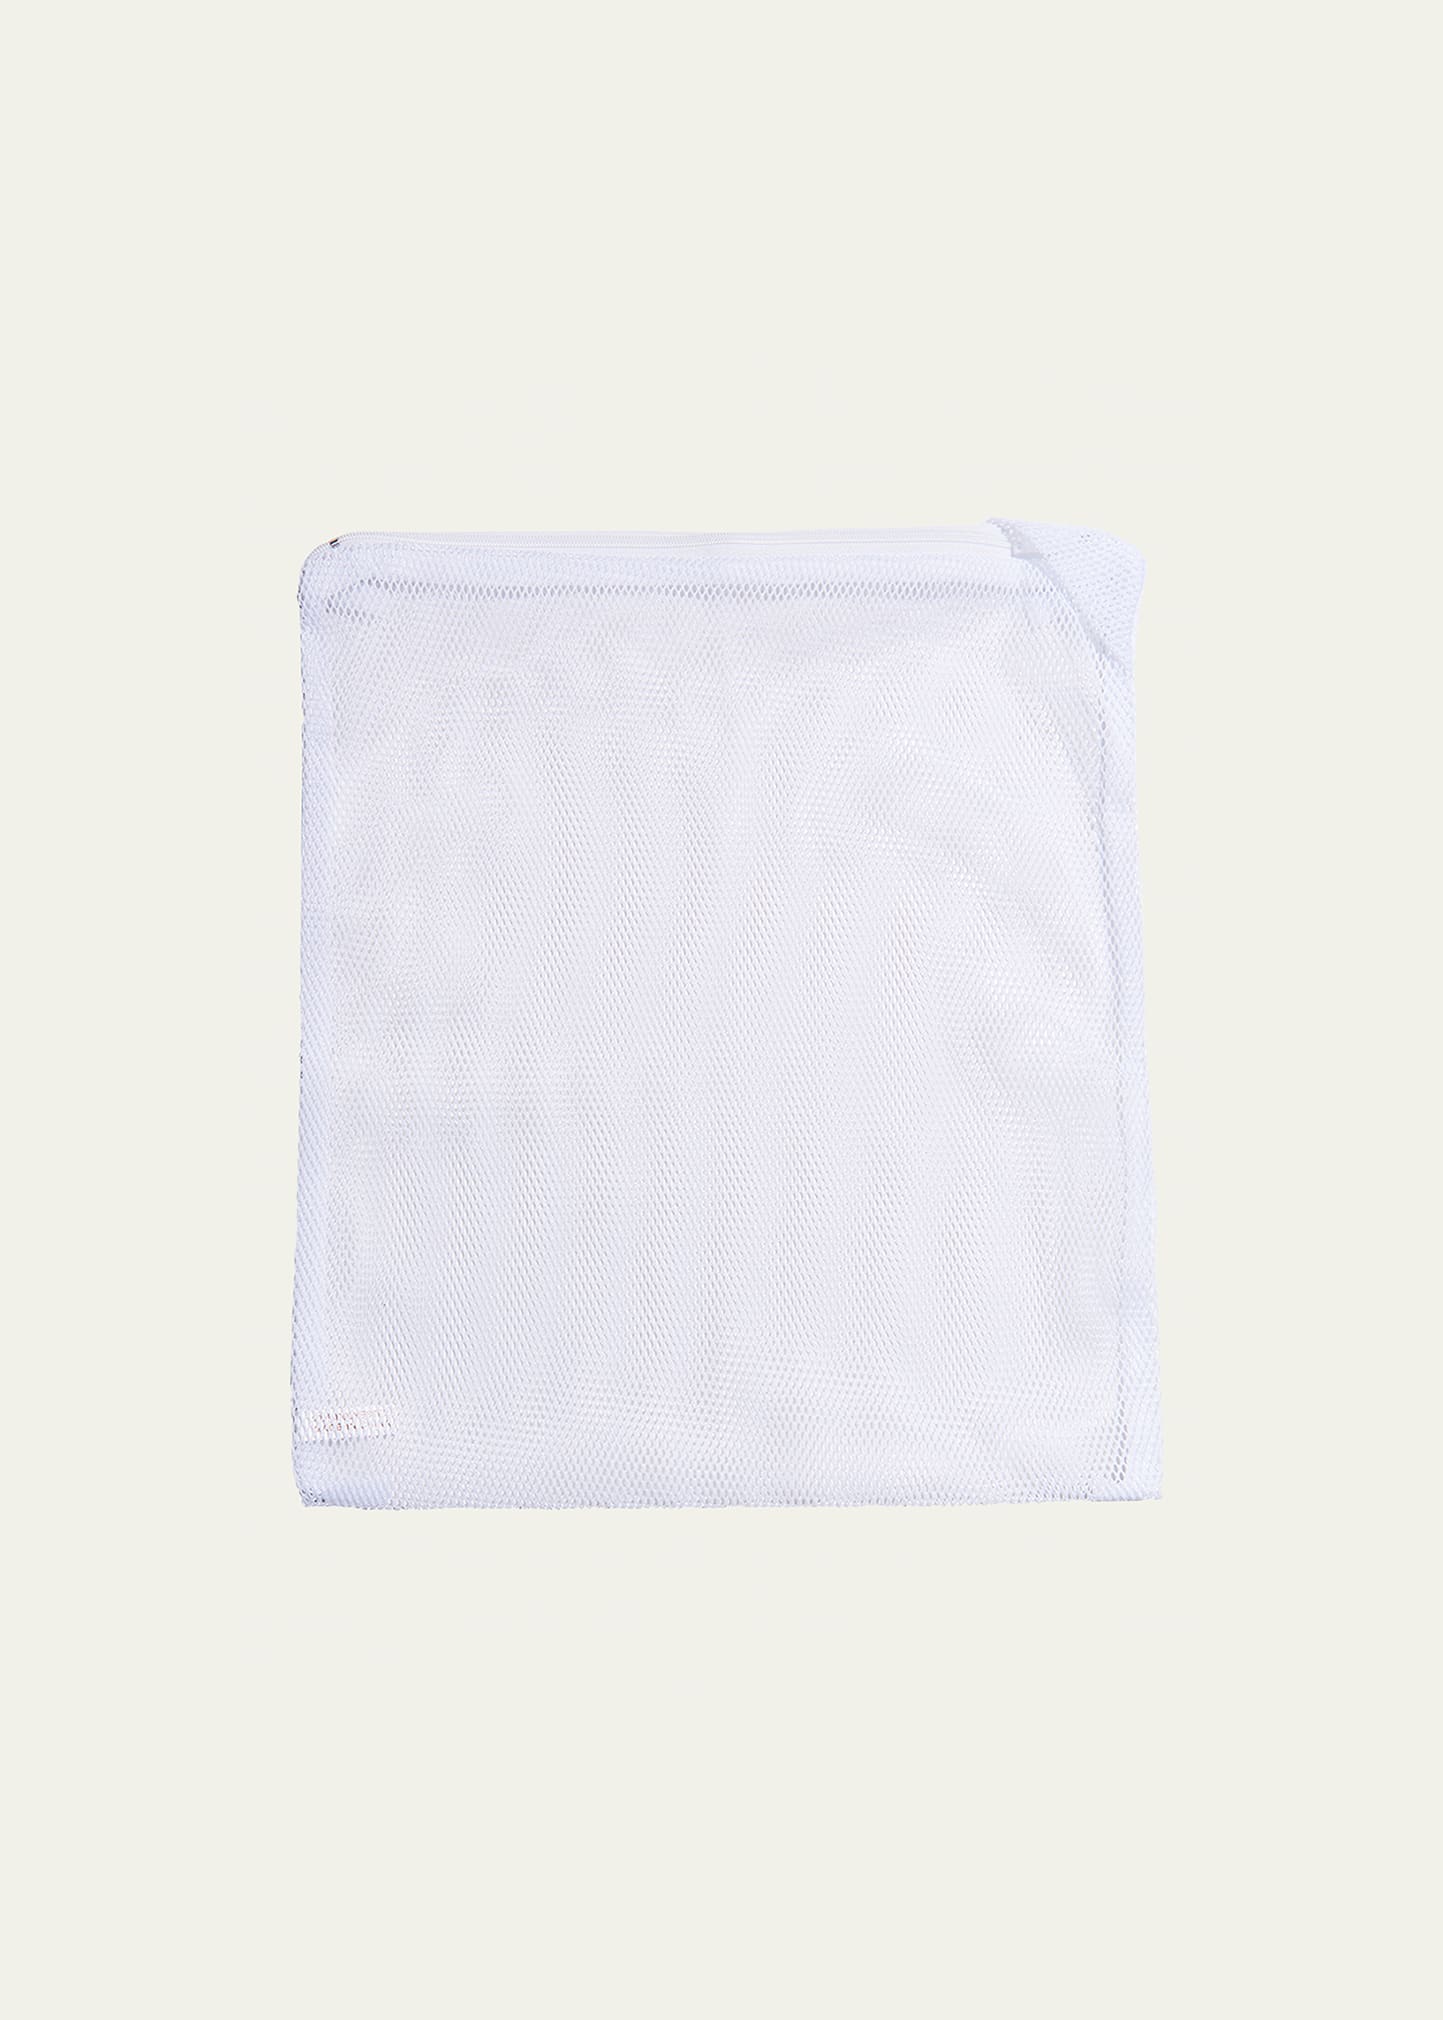 Fashion Forms Lingerie Laundry Bag, 14" x 115"